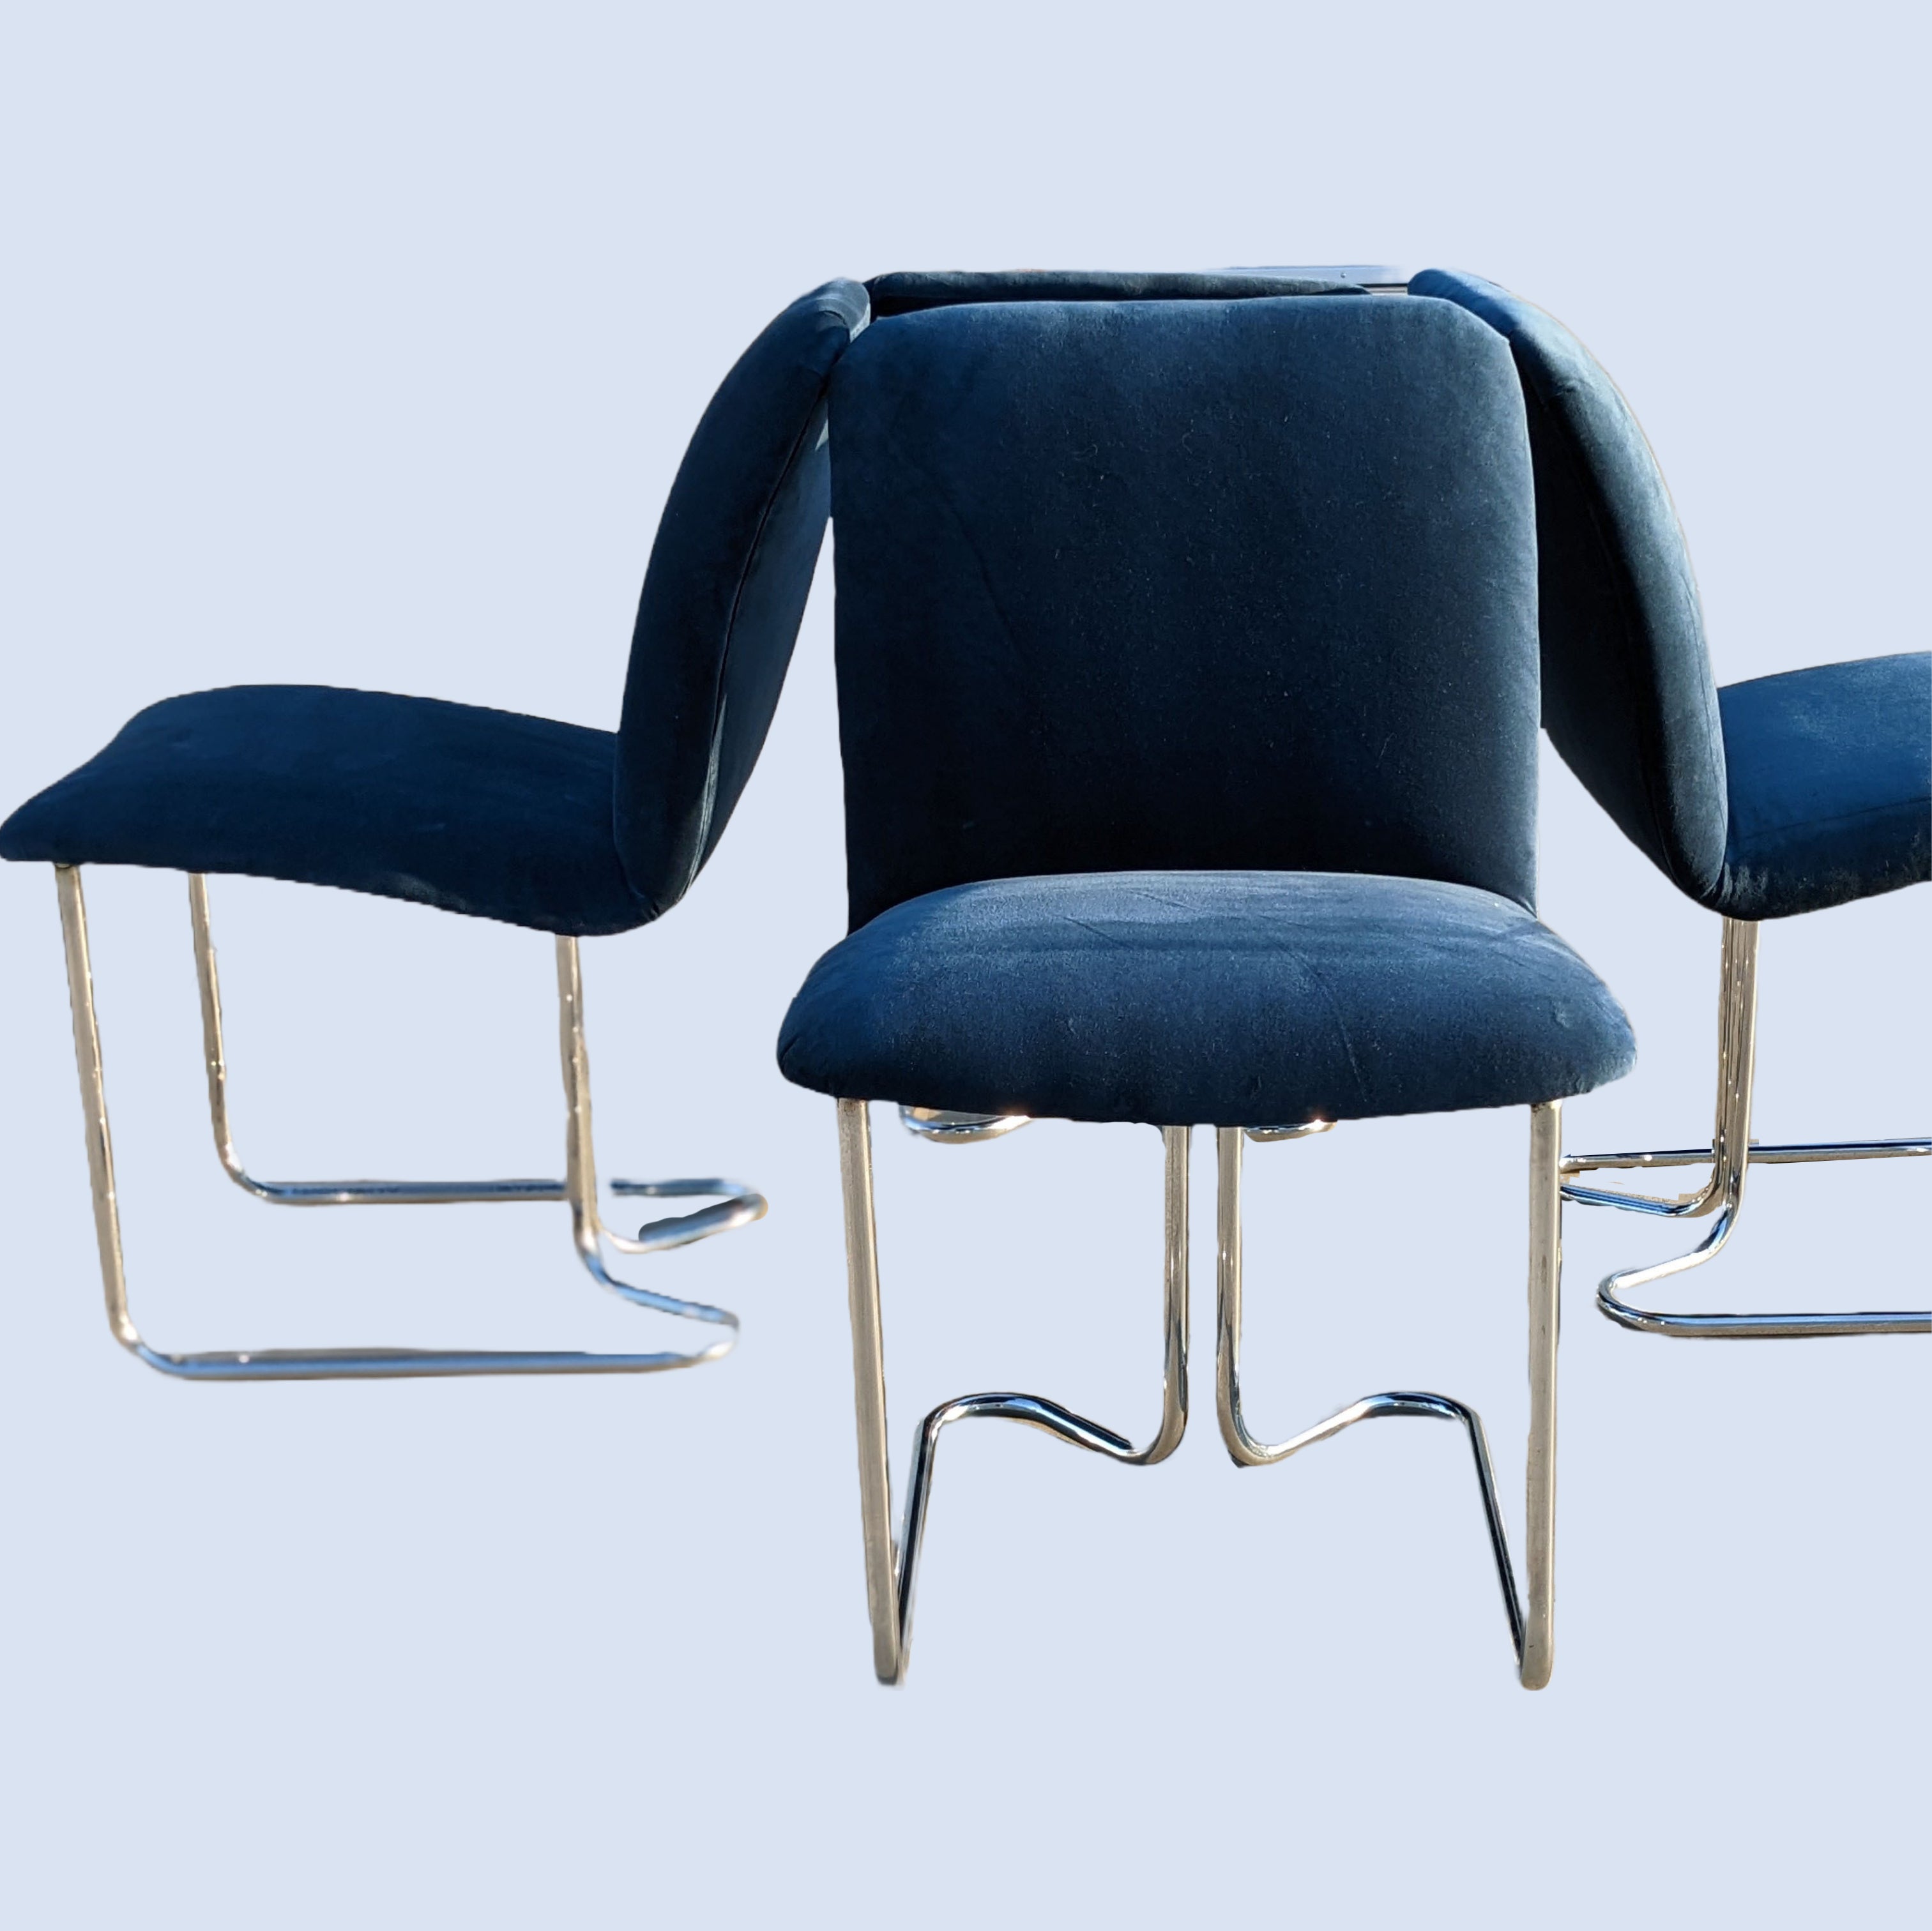 | Chairs S Tubular | Velvet Bauhaus Casa Milo Baughman Chrome | Blue Dining DIA – for